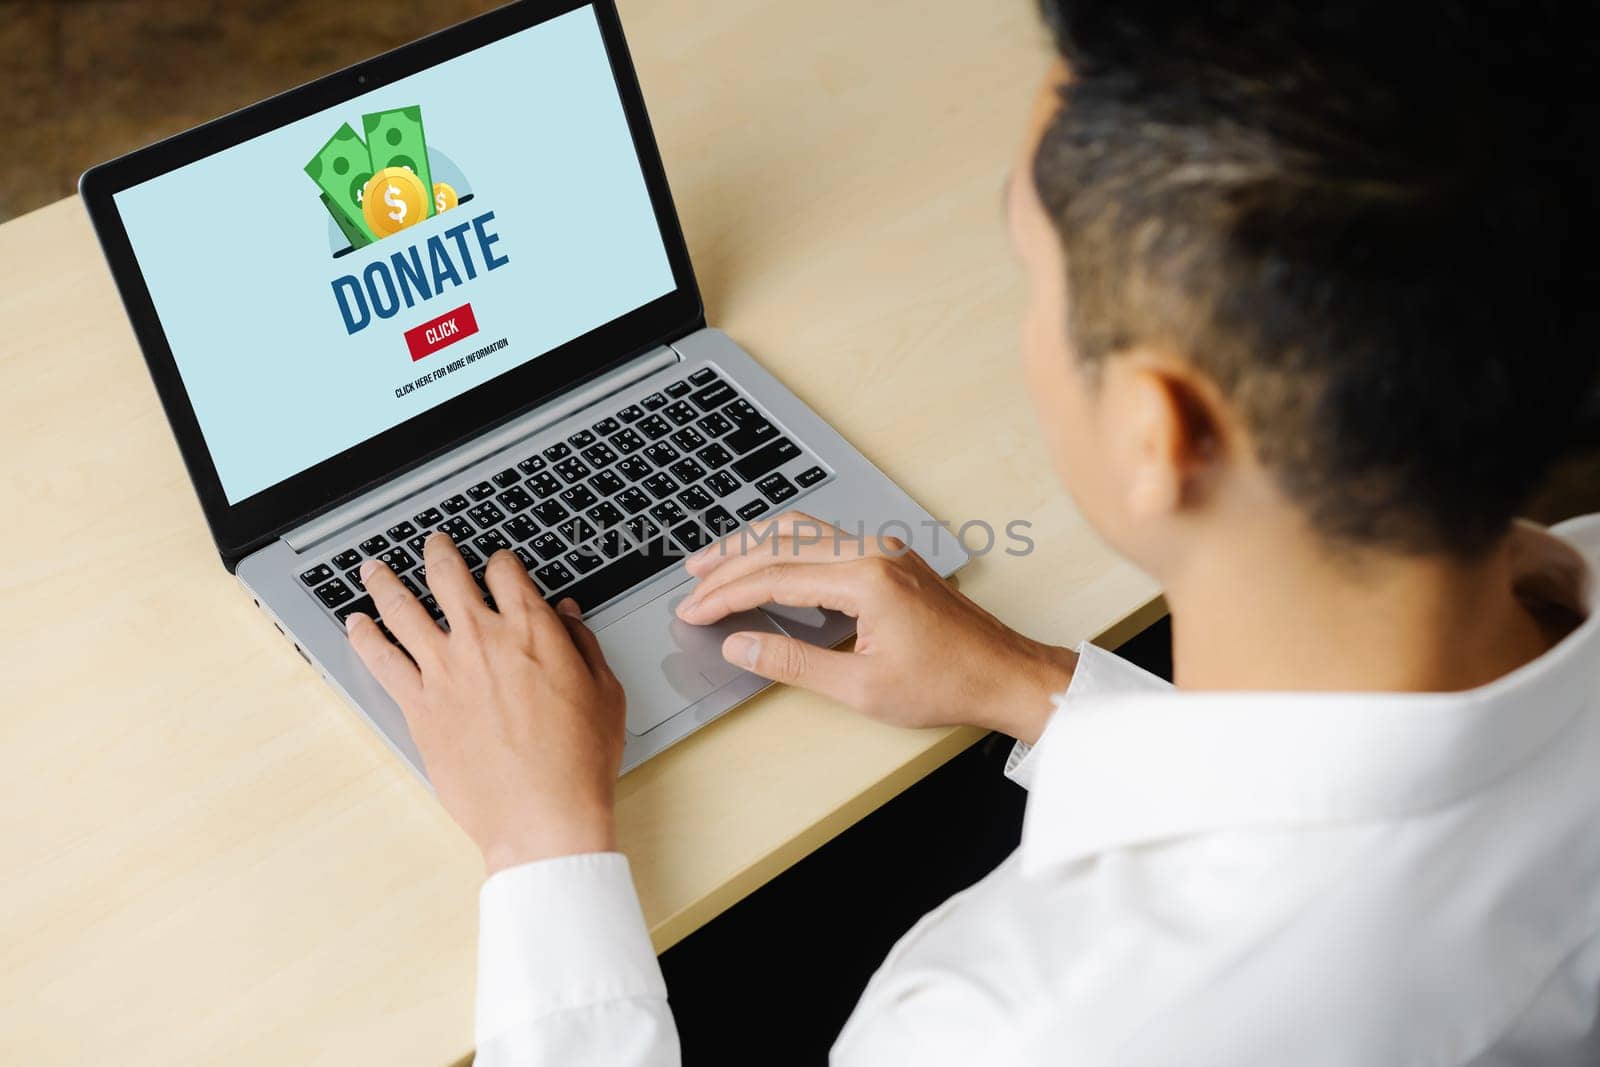 Online donation platform offer modish money sending system by biancoblue